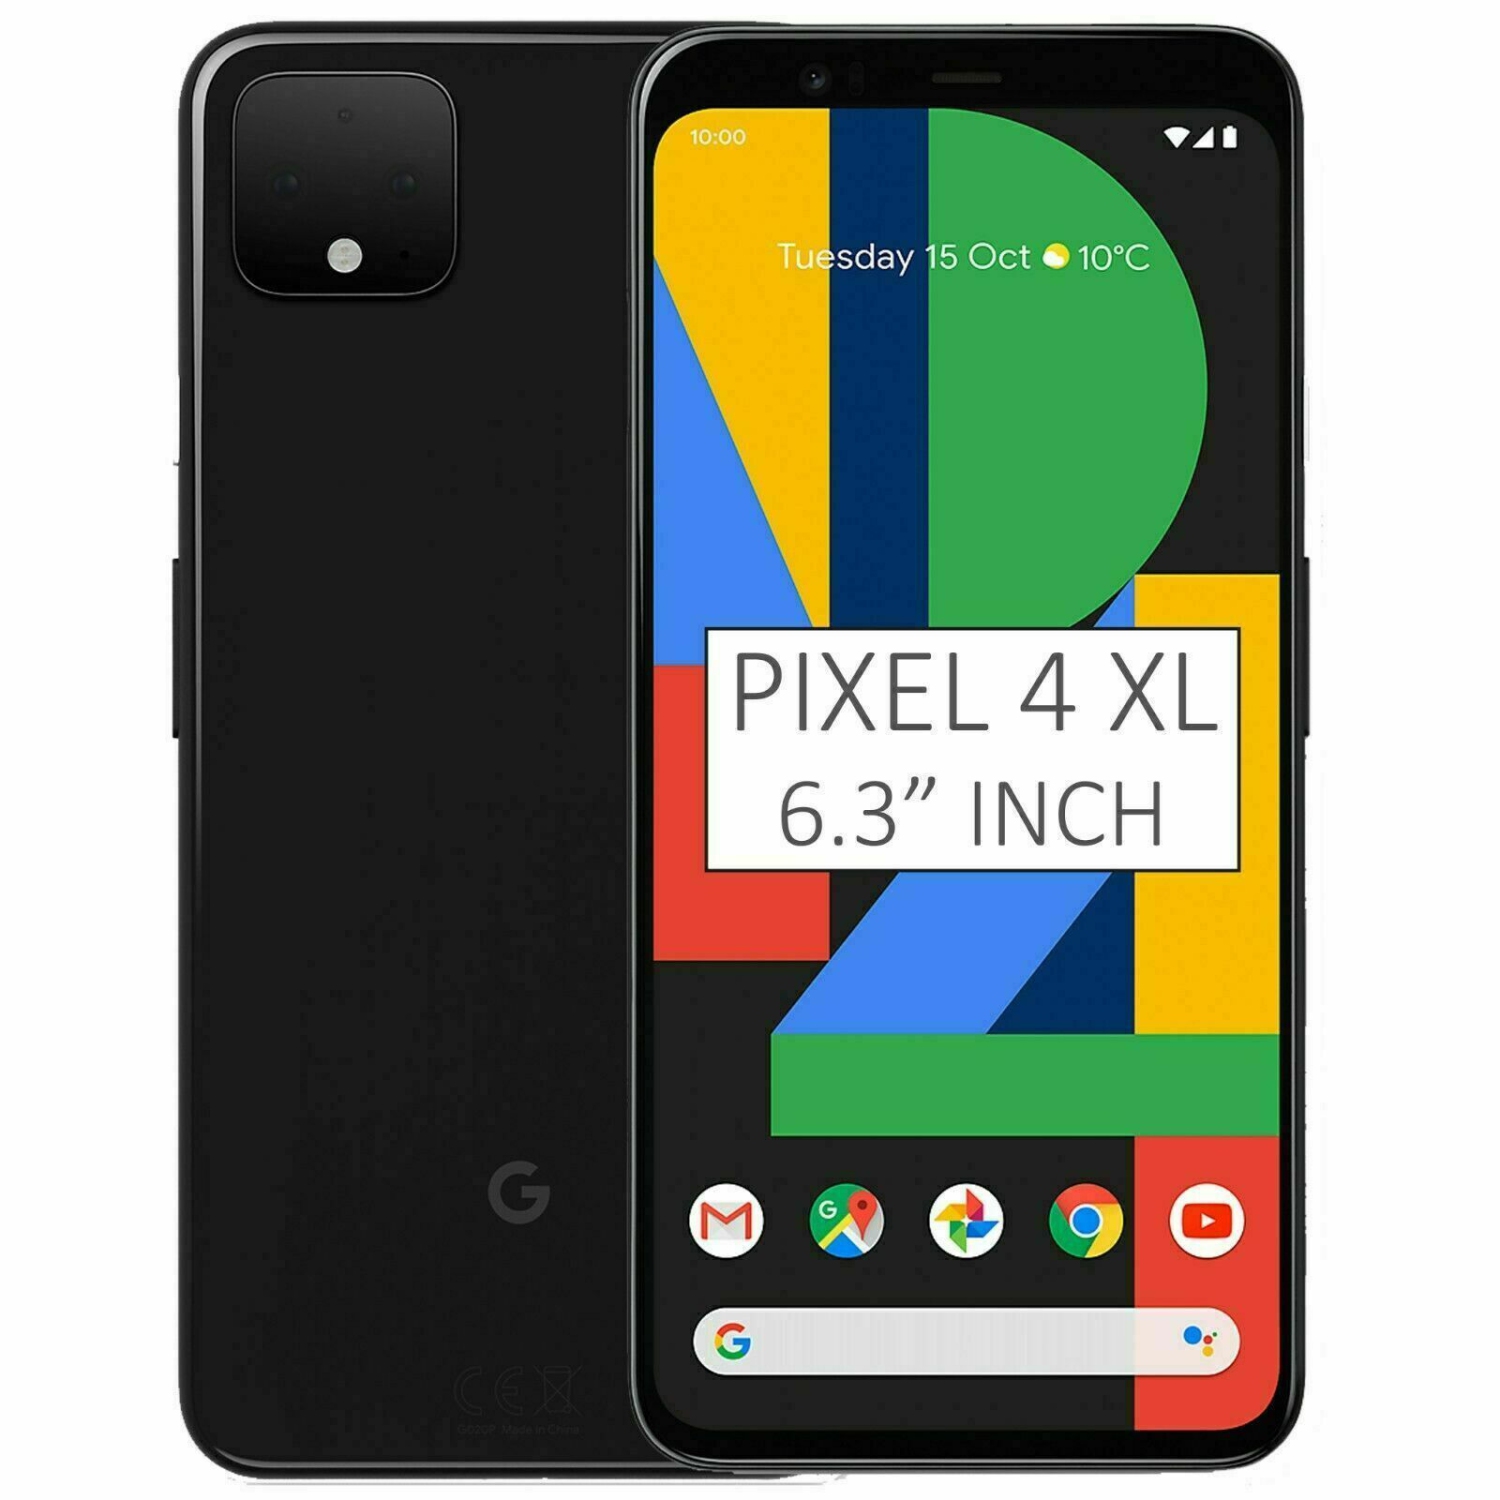 Google Pixel 4 XL 64GB Smartphone - Just Black - Unlocked - Open Box